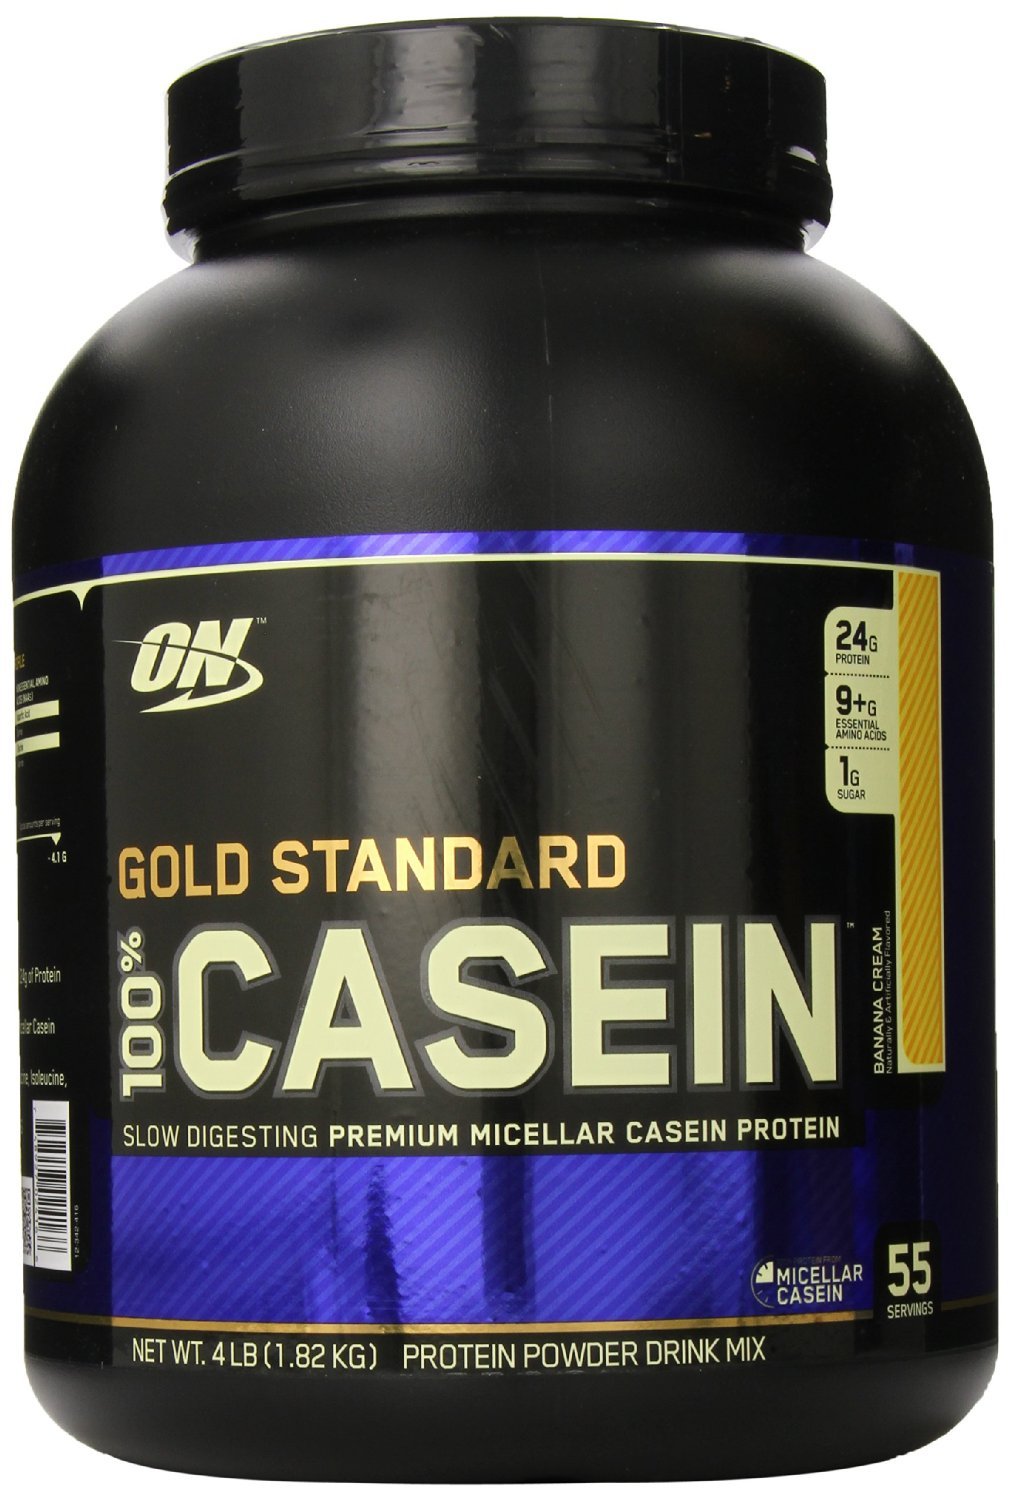 Gold Standart 100% Casein, 1800 g, Optimum Nutrition. Caseína. Weight Loss 